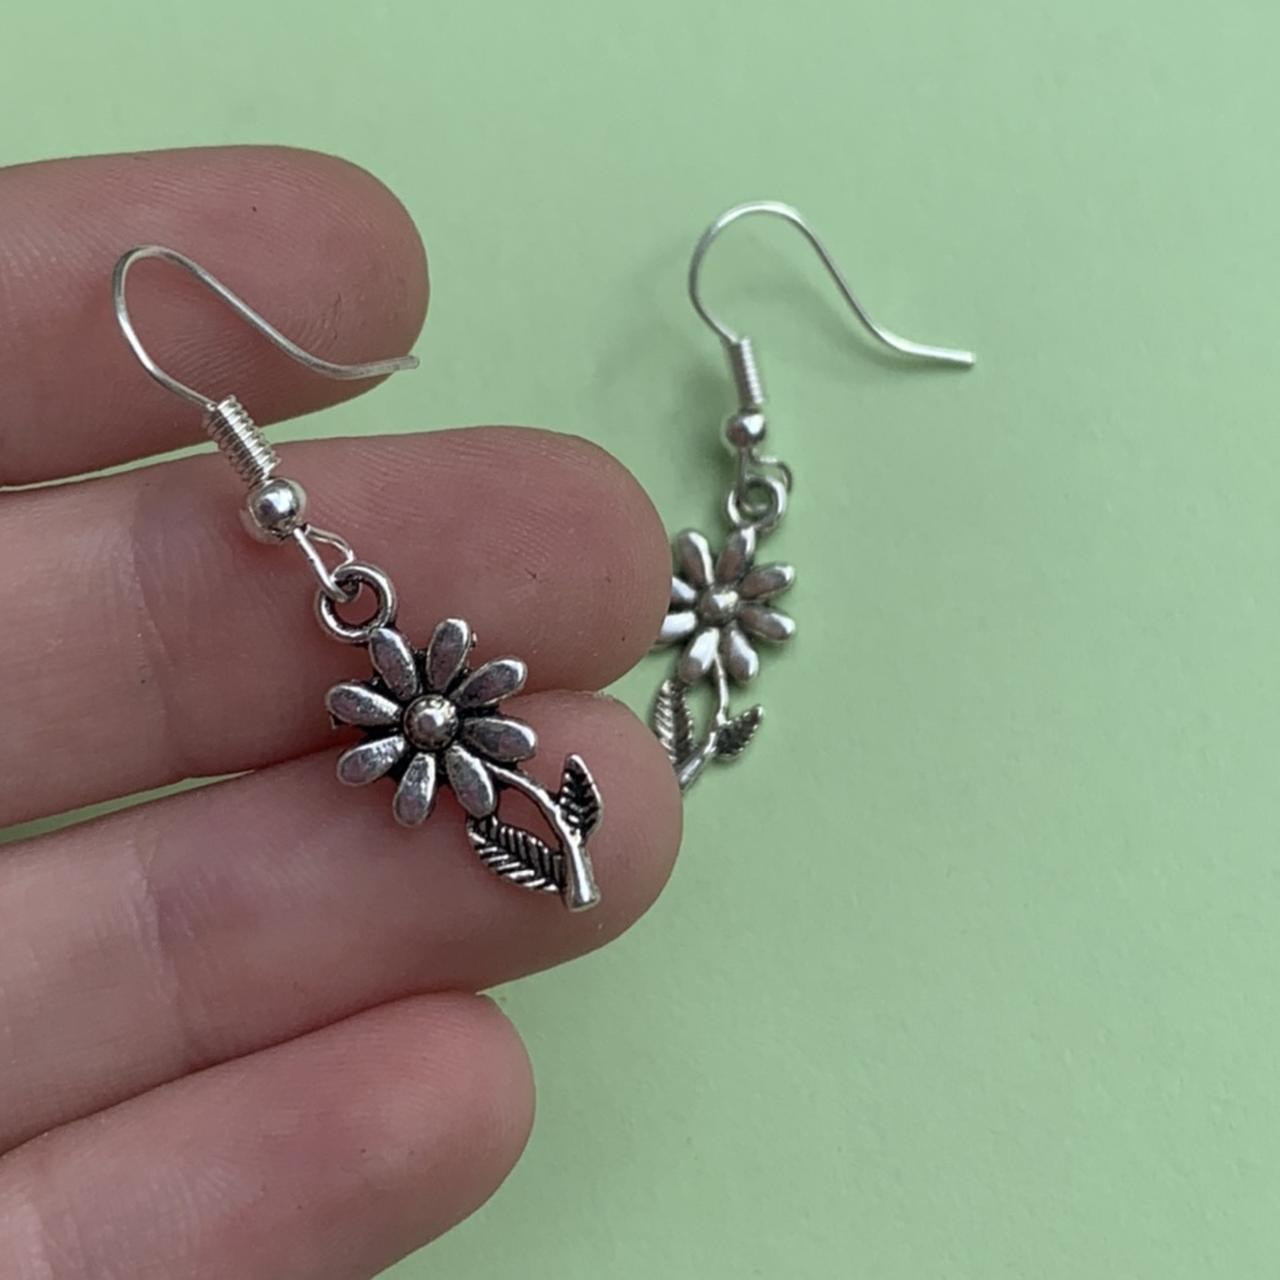 The flower earrings